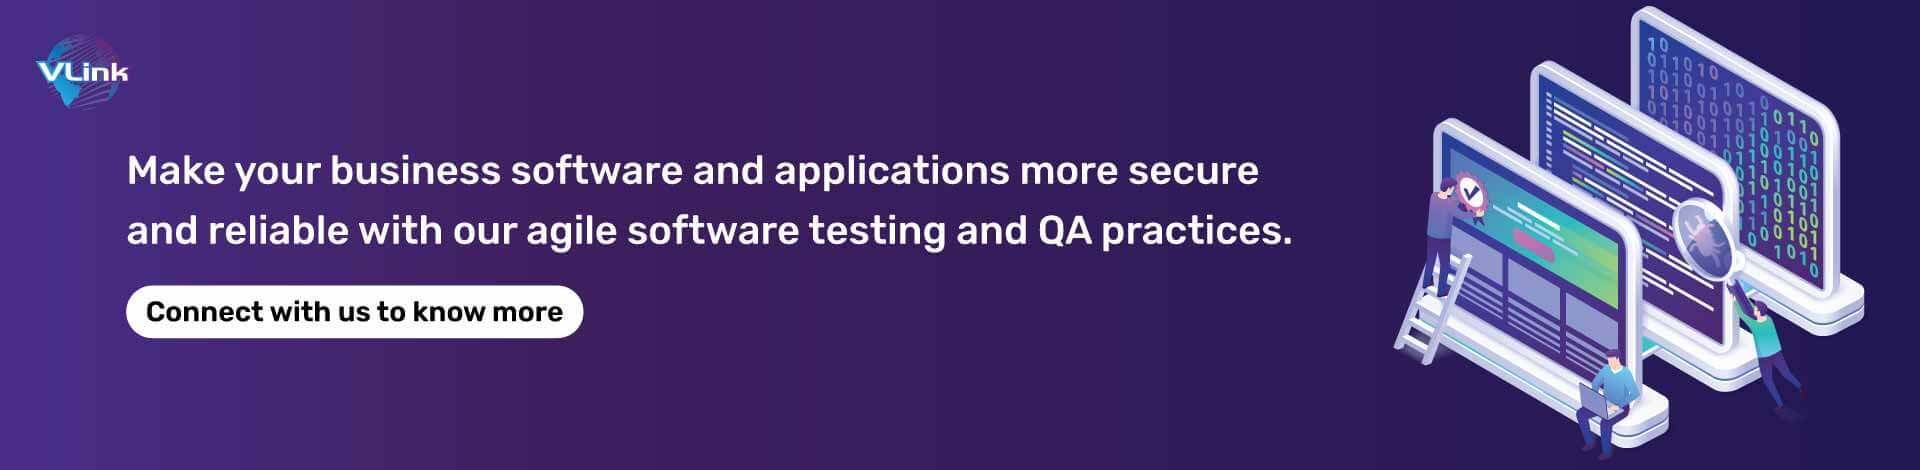 Software Testing & QA Best Practices for Enterprises-CTA